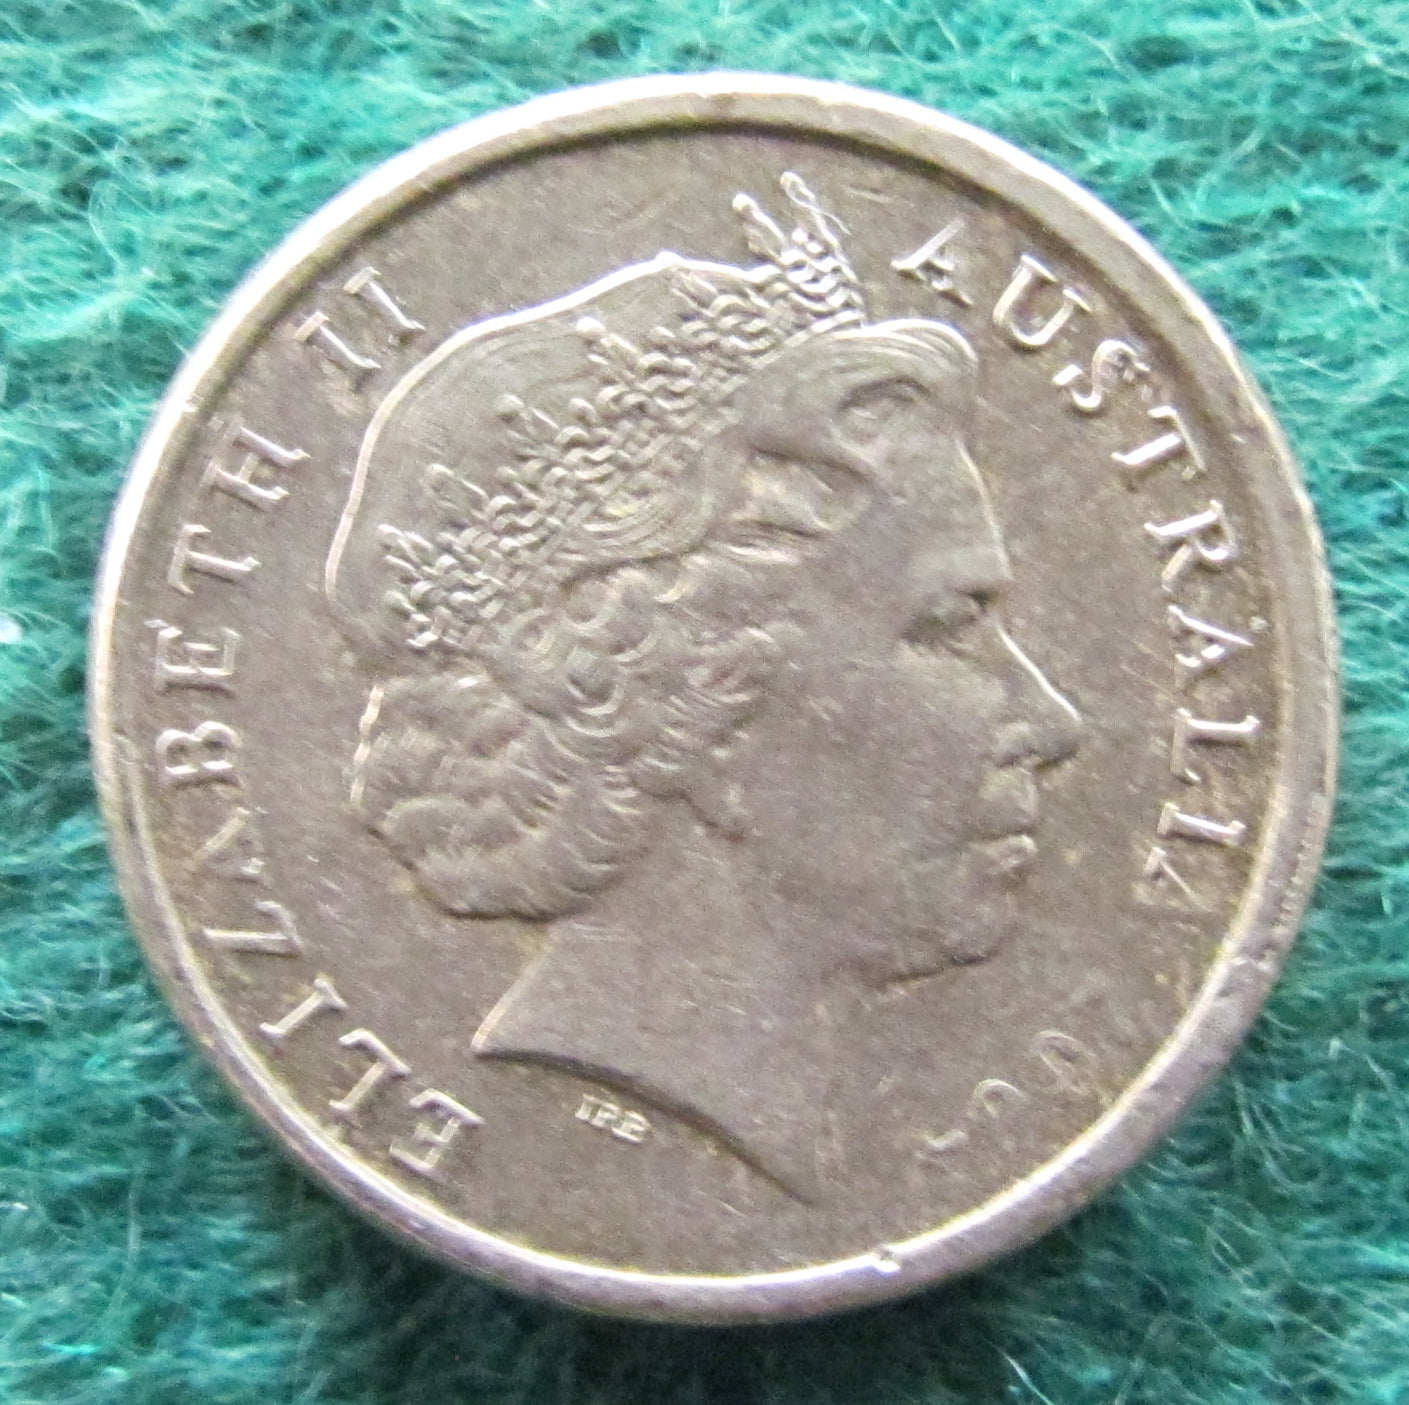 Australian 2004 2 Dollar Aboriginal Elder Queen Elizabeth Coin - Circulated